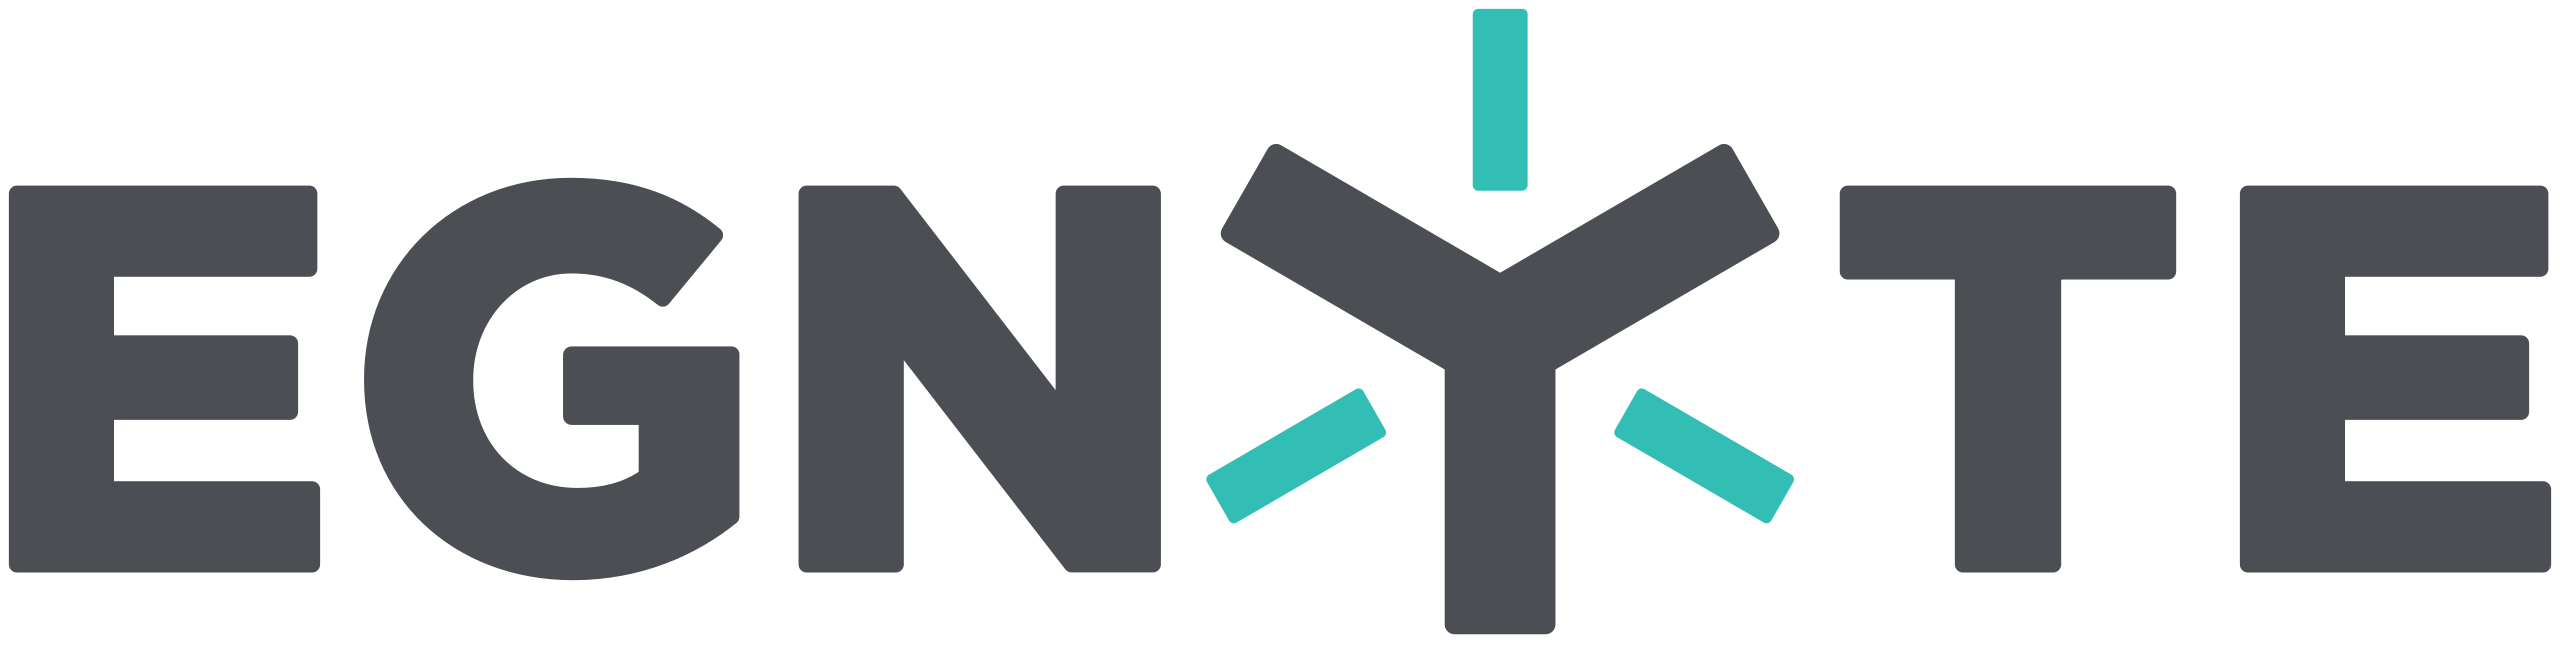 logotipo de egnyte